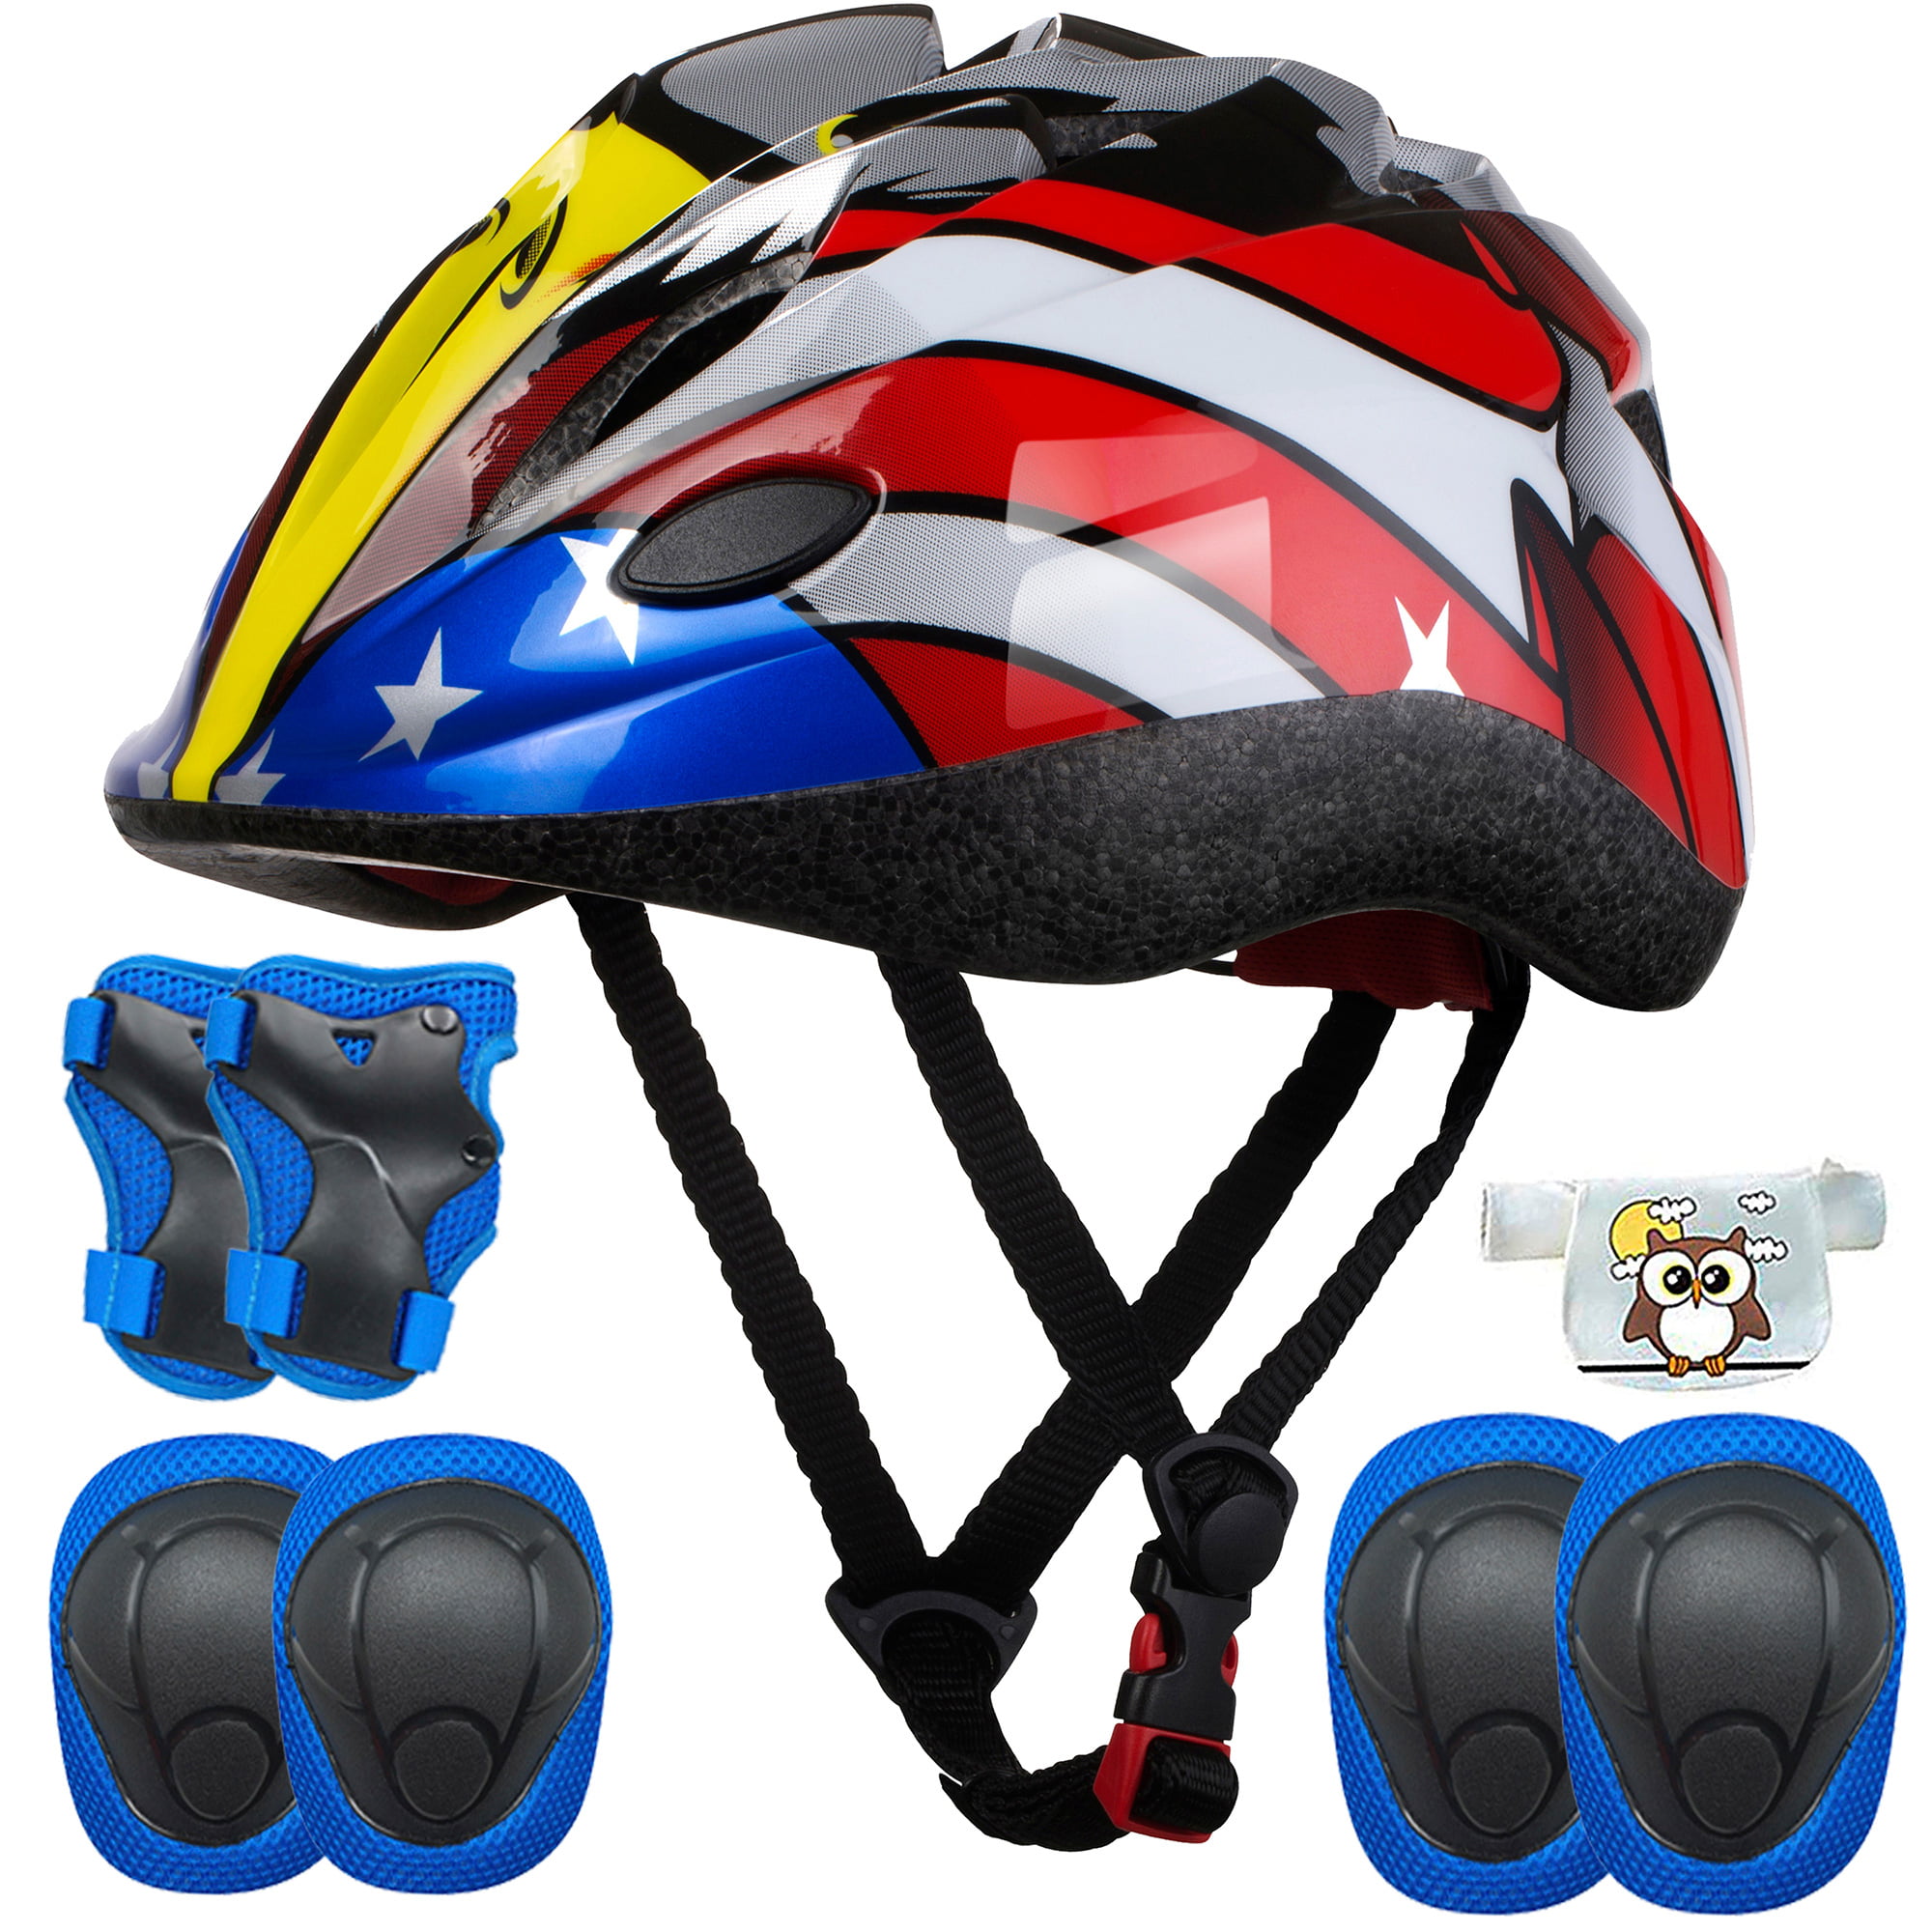 Adjustable Helmets for Kids Knee Pads+Elbow Pads+Wrist Pads+ Helmet UAAO Kids Protective Gear Set,Roller Skating Skateboard BMX Scooter Cycling Protective Gear Pads 